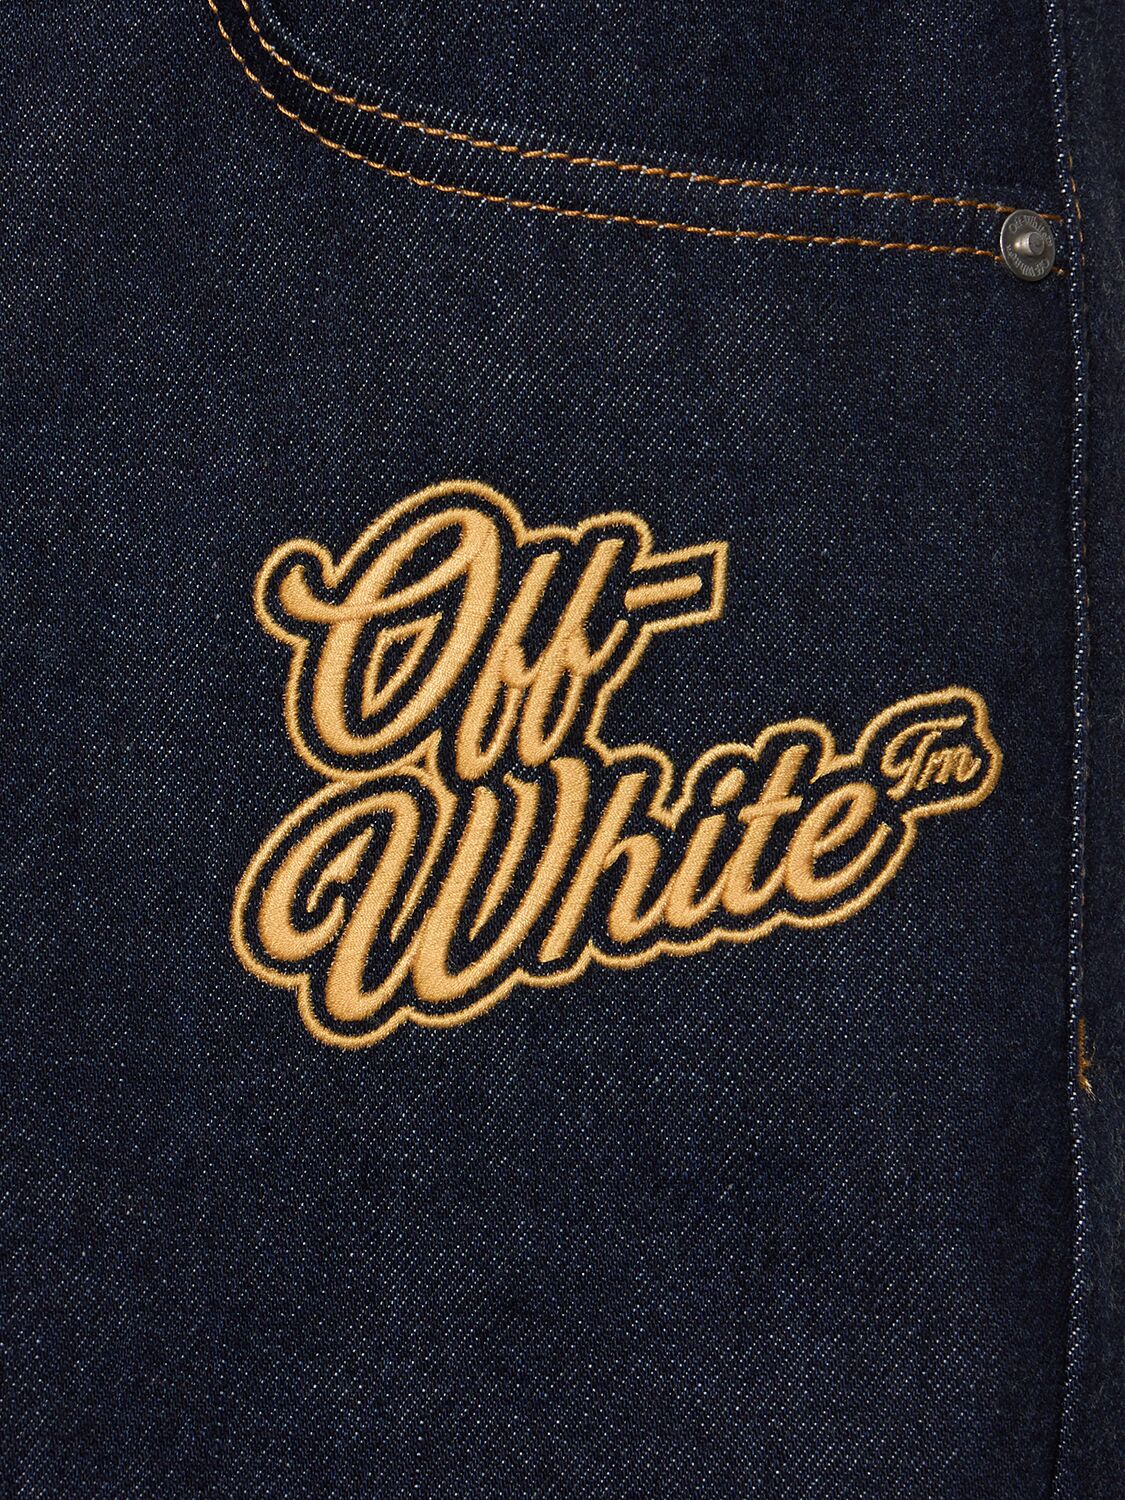 Off-White 90SLOGO DEN SHORTS - 4522 RAW BLUE GOLD FUSION